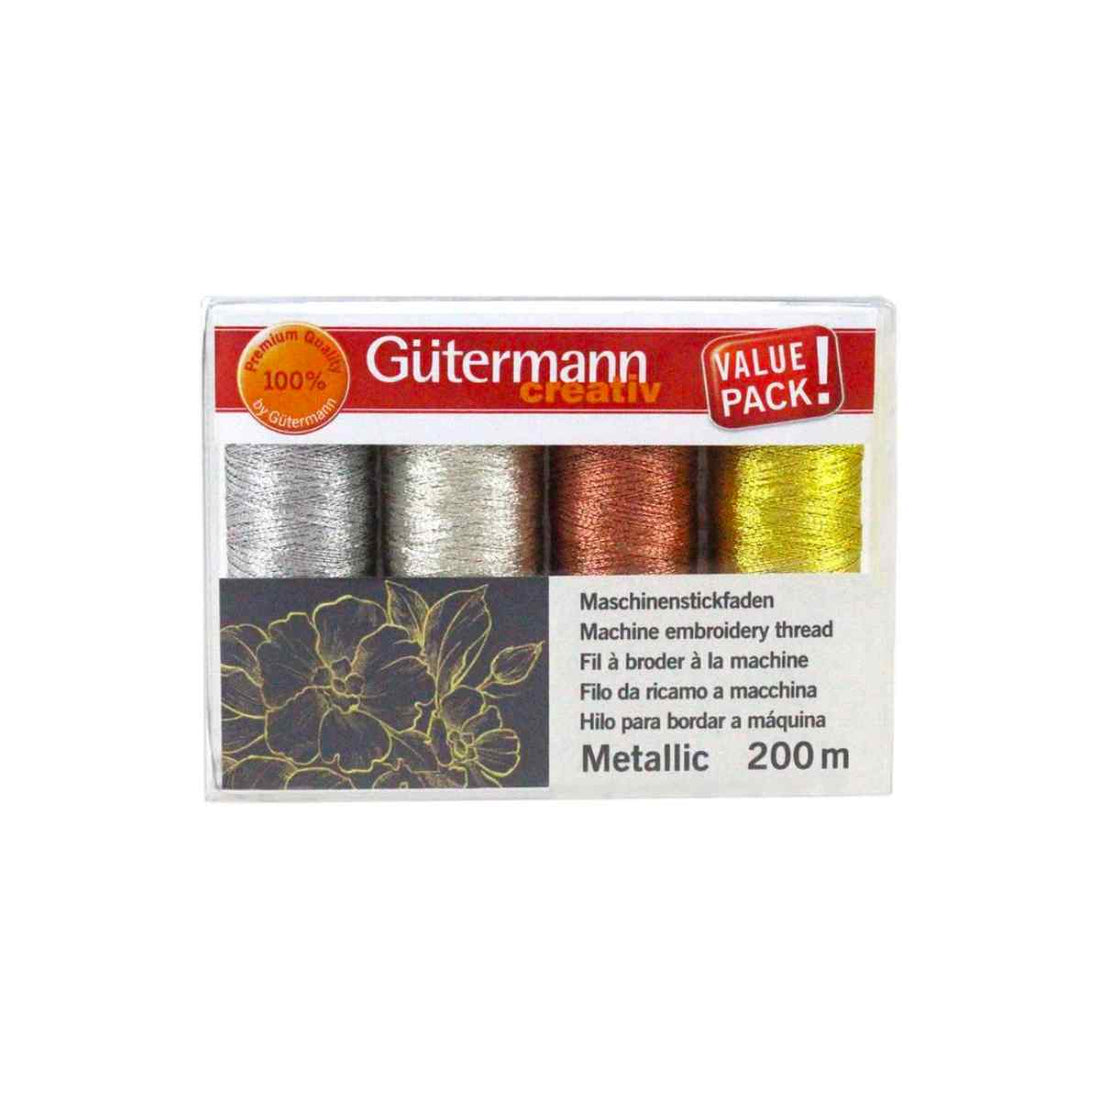 Gutermann Machine Embroidery Metallic Thread, Set of 4